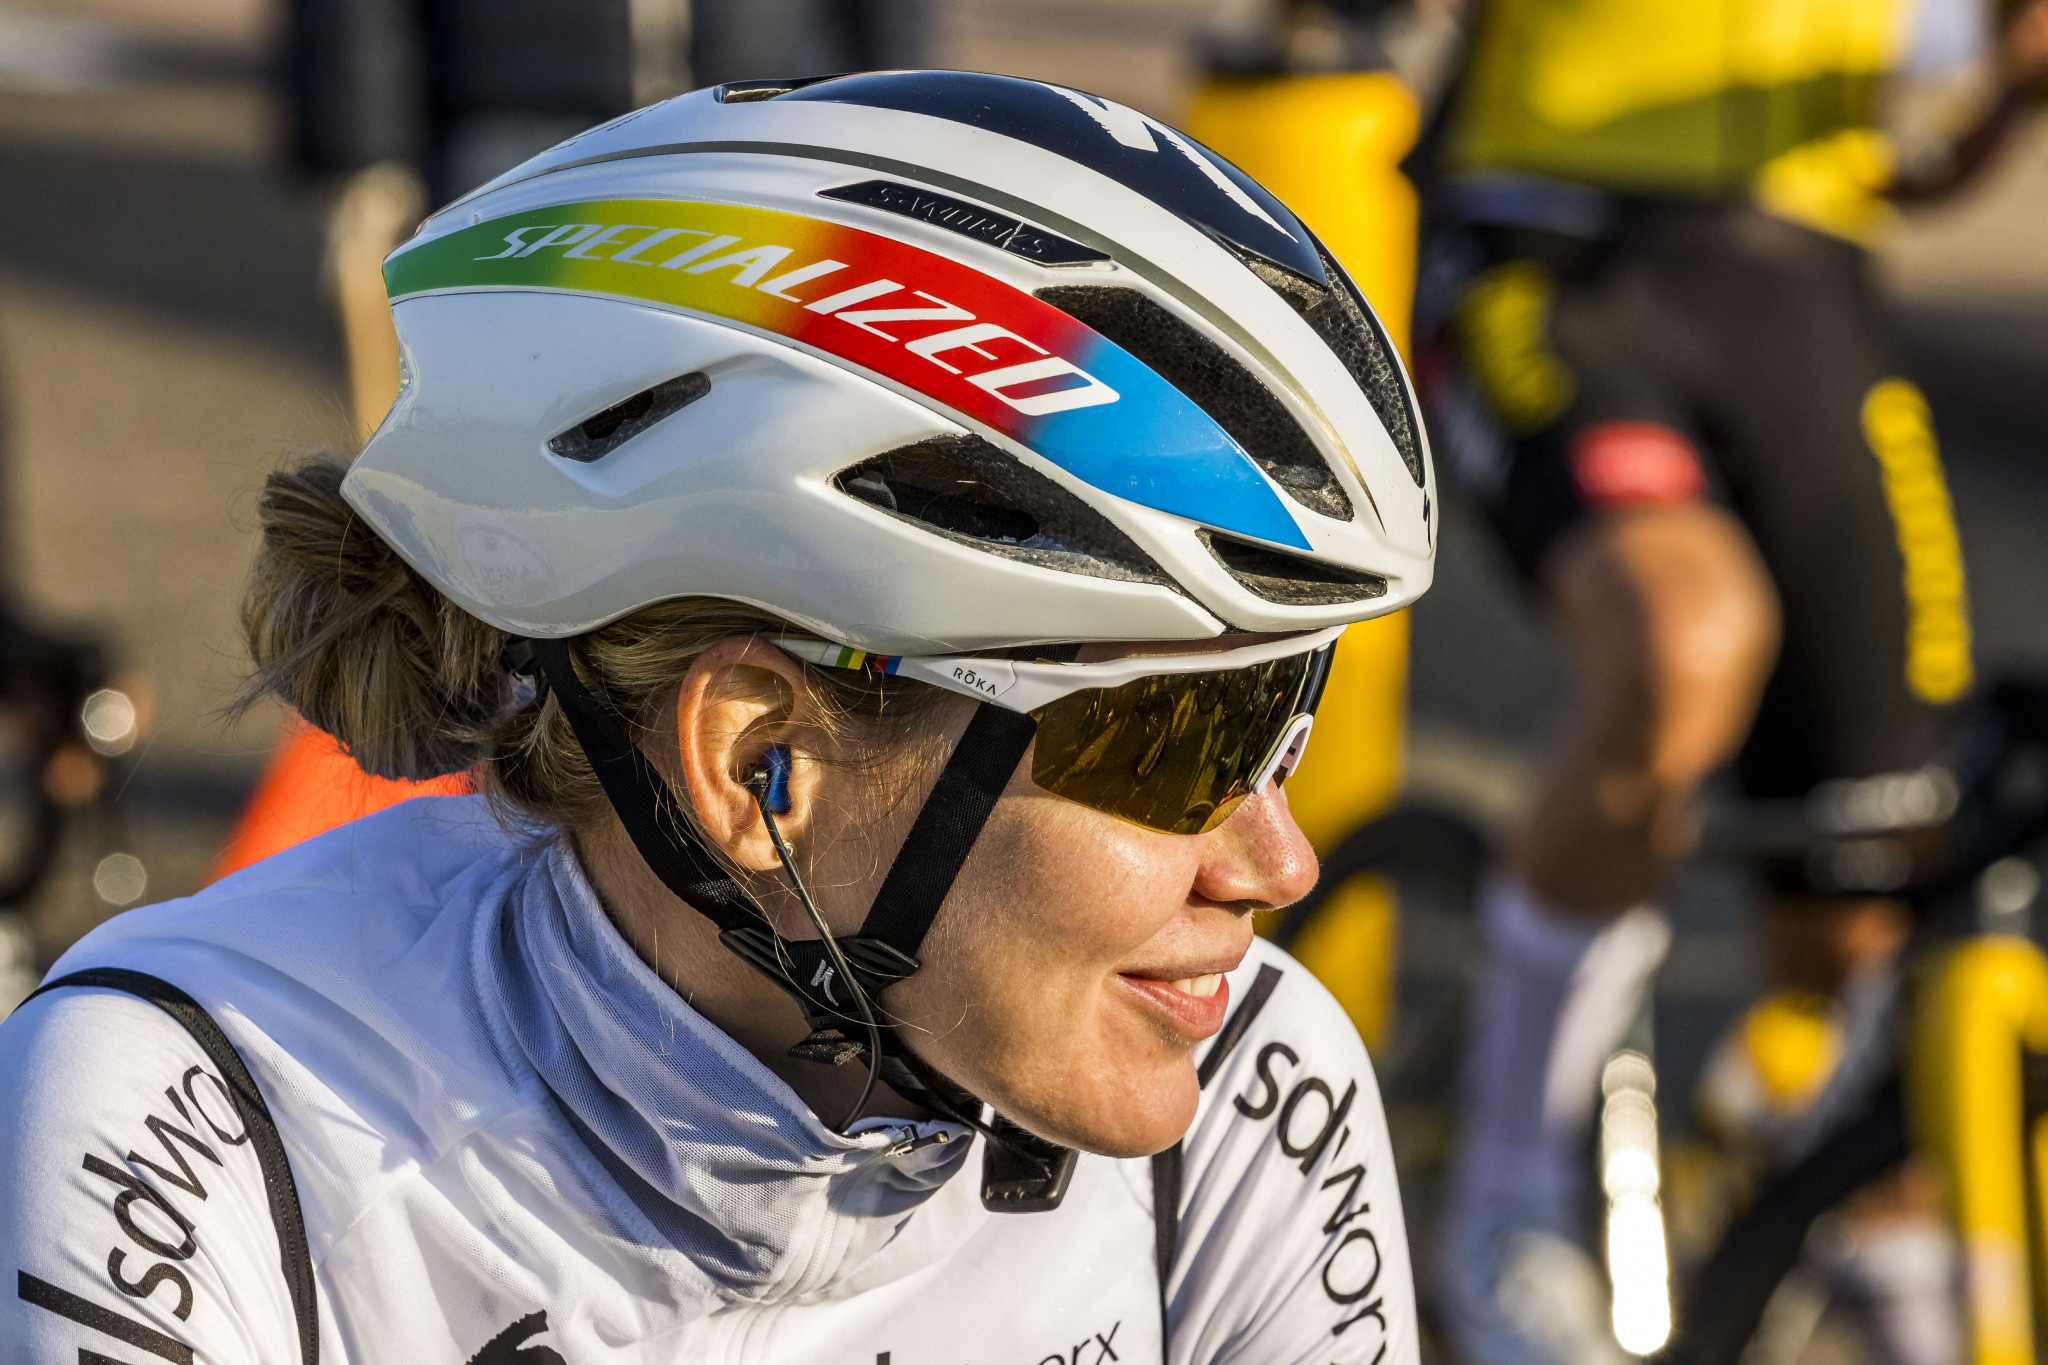 Van der Breggen extends Giro Donne lead by winning time trial